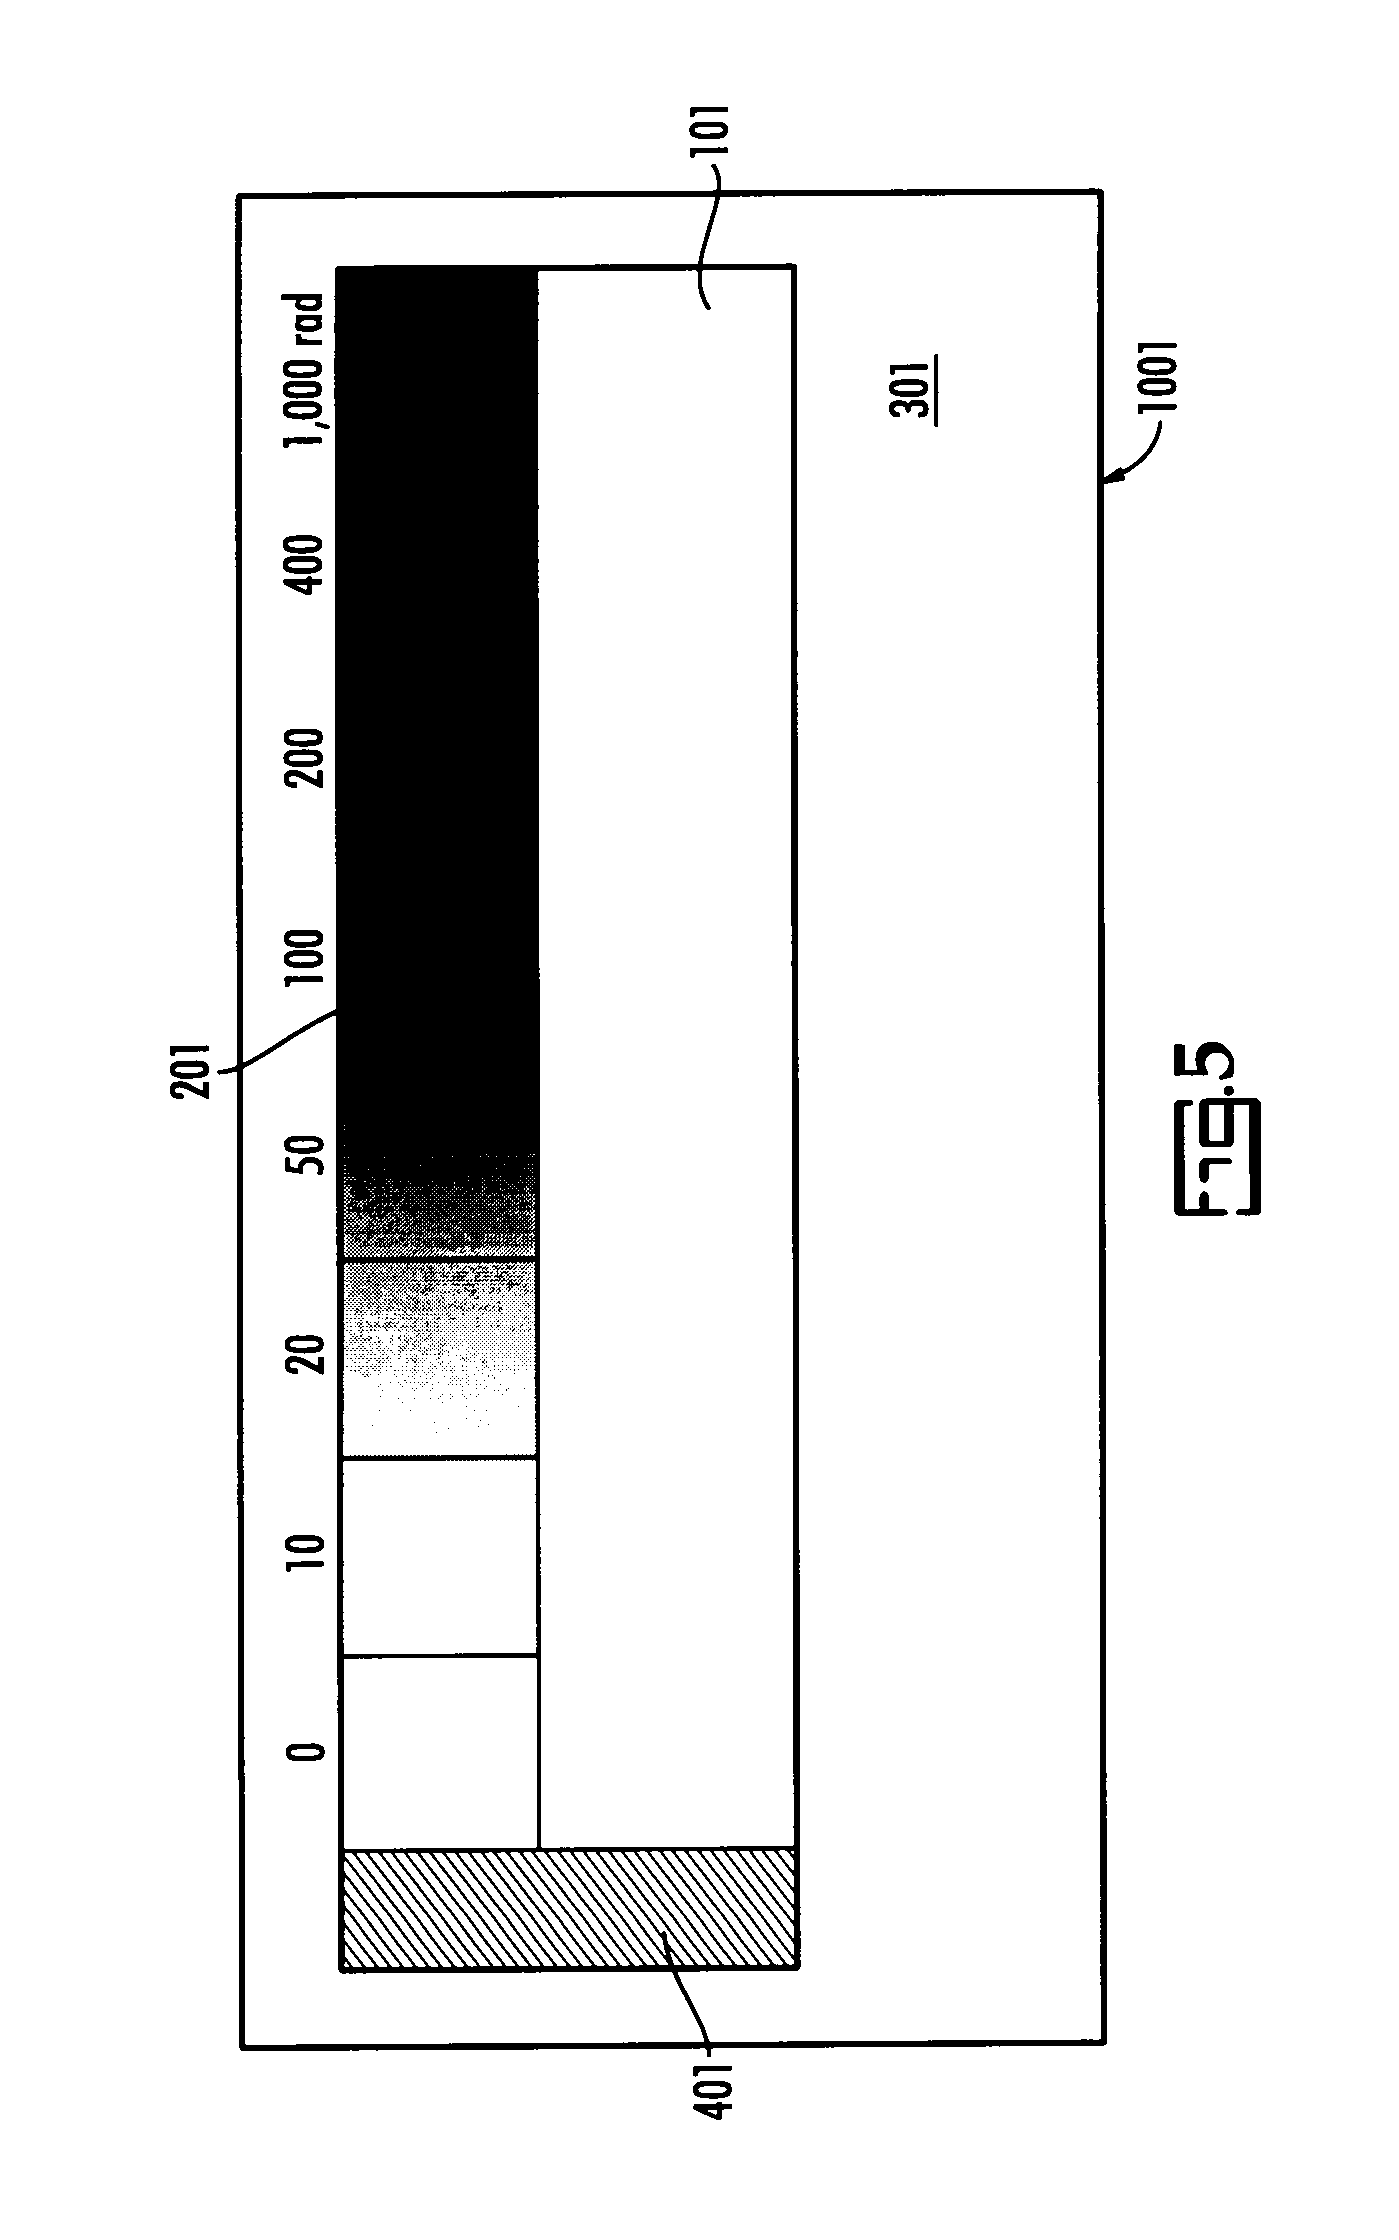 Personal and area self-indicating radiation alert dosimeter